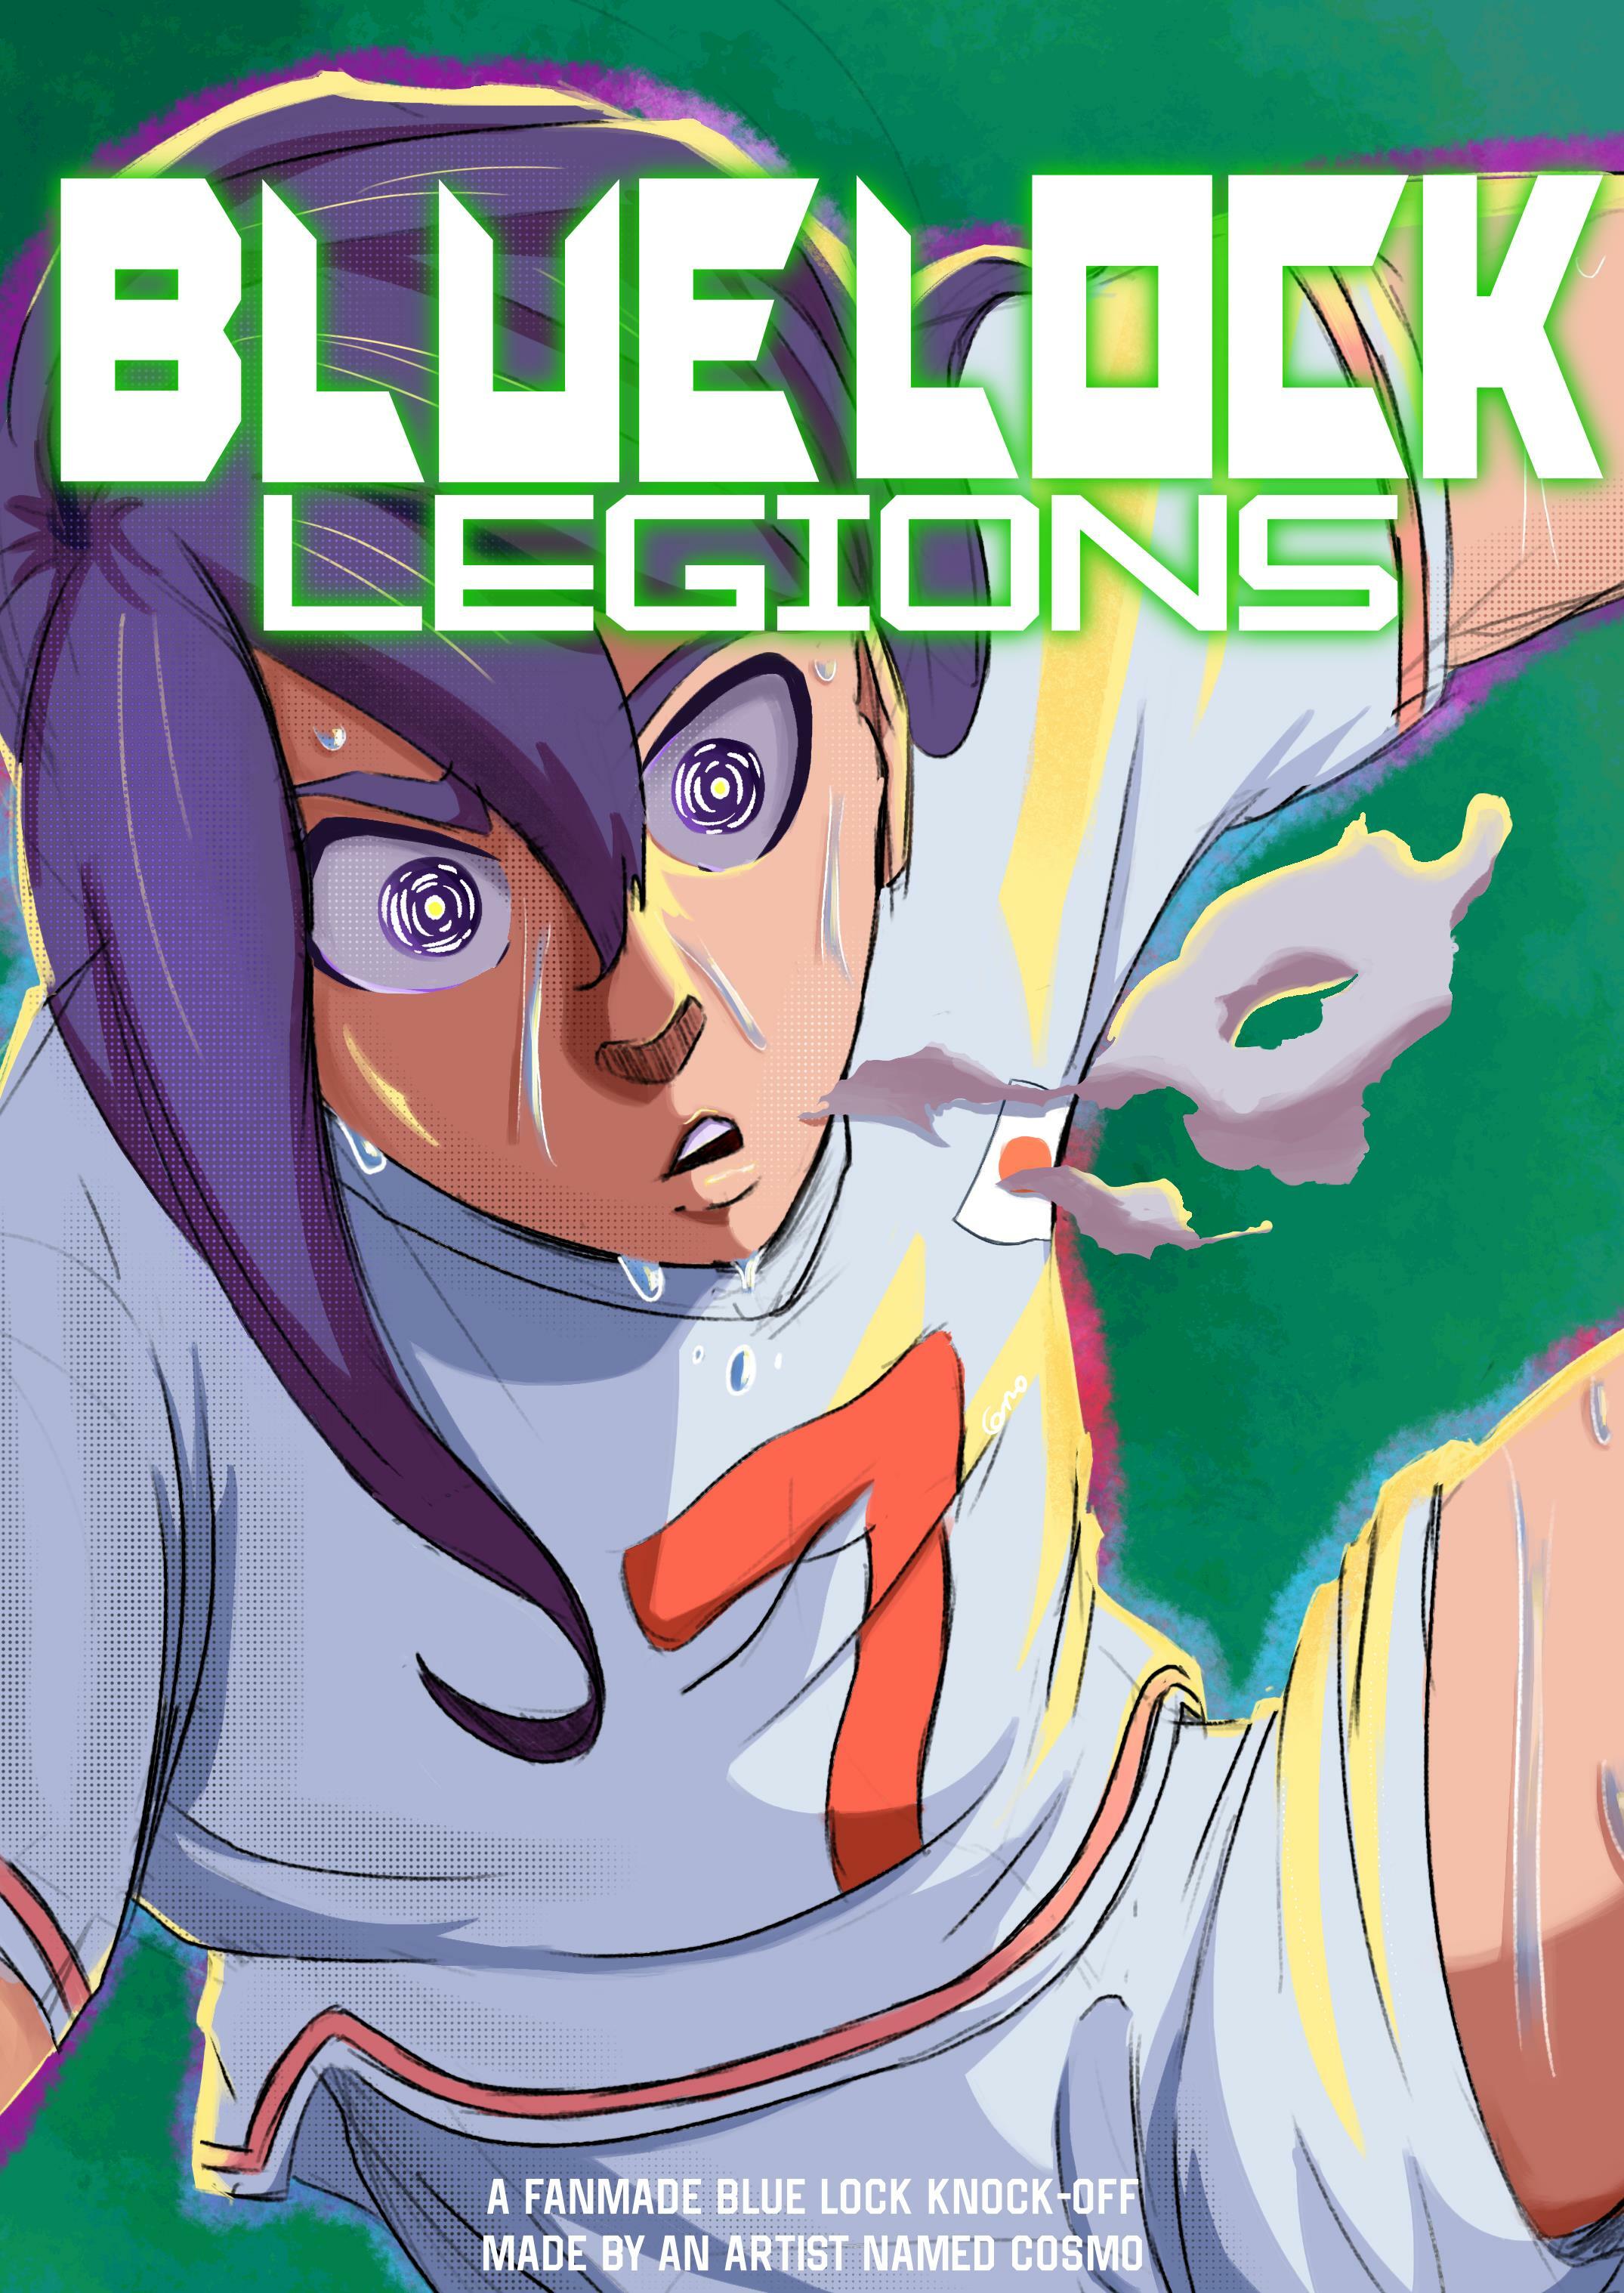 blue lock, Chapter 113 - blue lock Manga Online